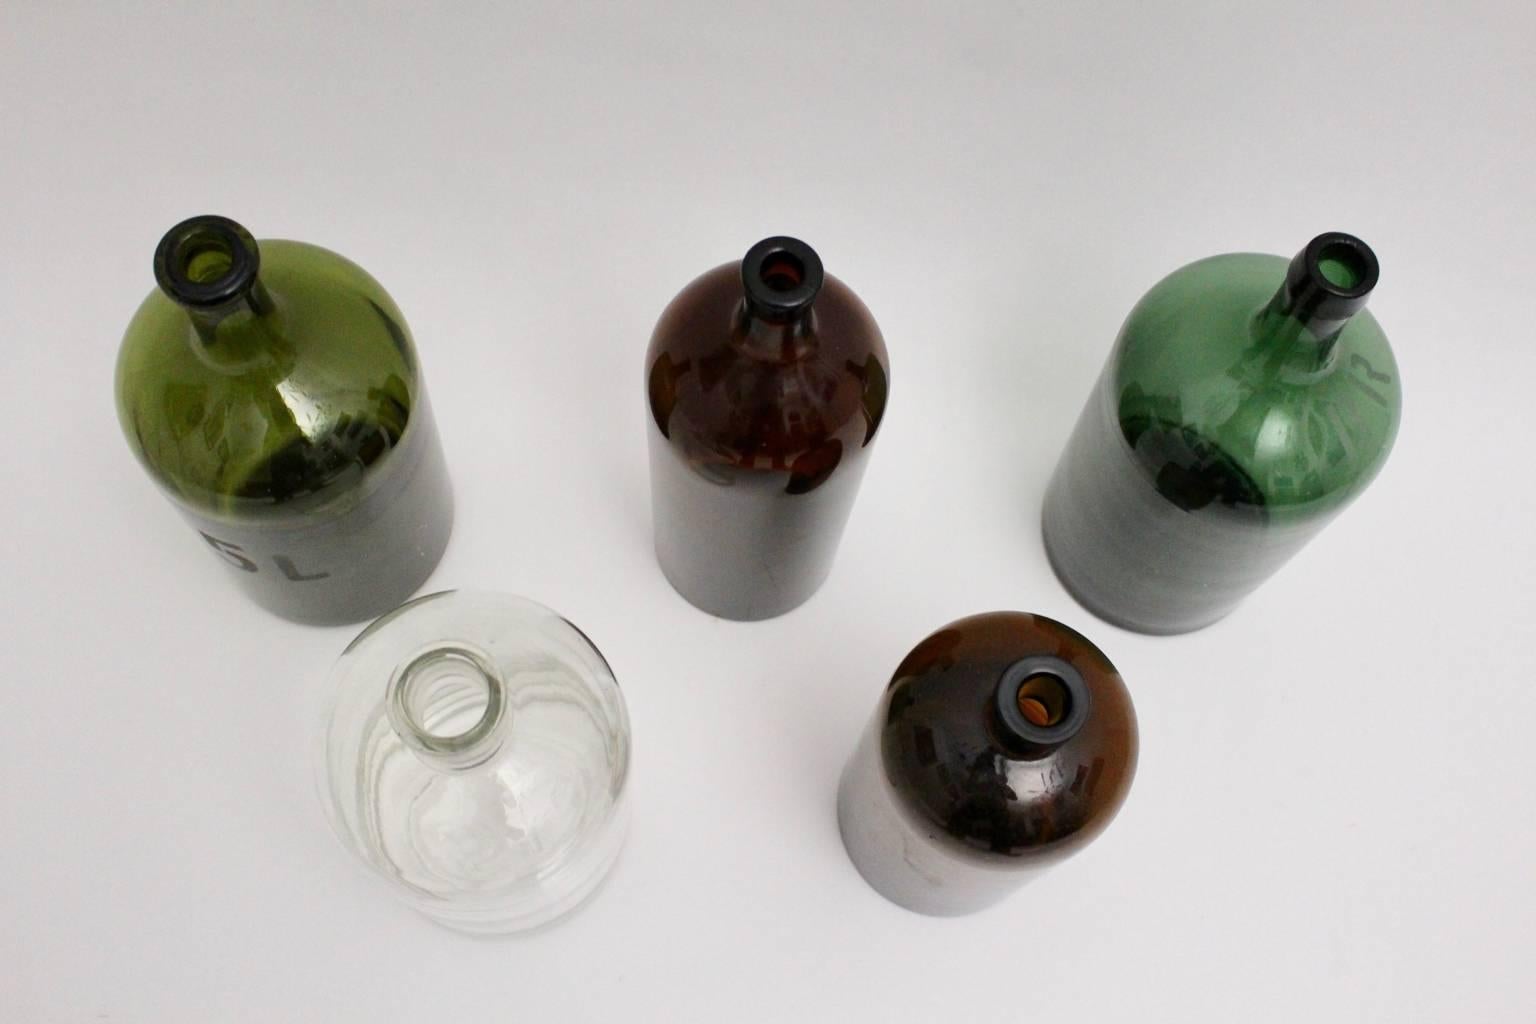 Austrian Art Deco Glass Bottles, 1920s, Austria